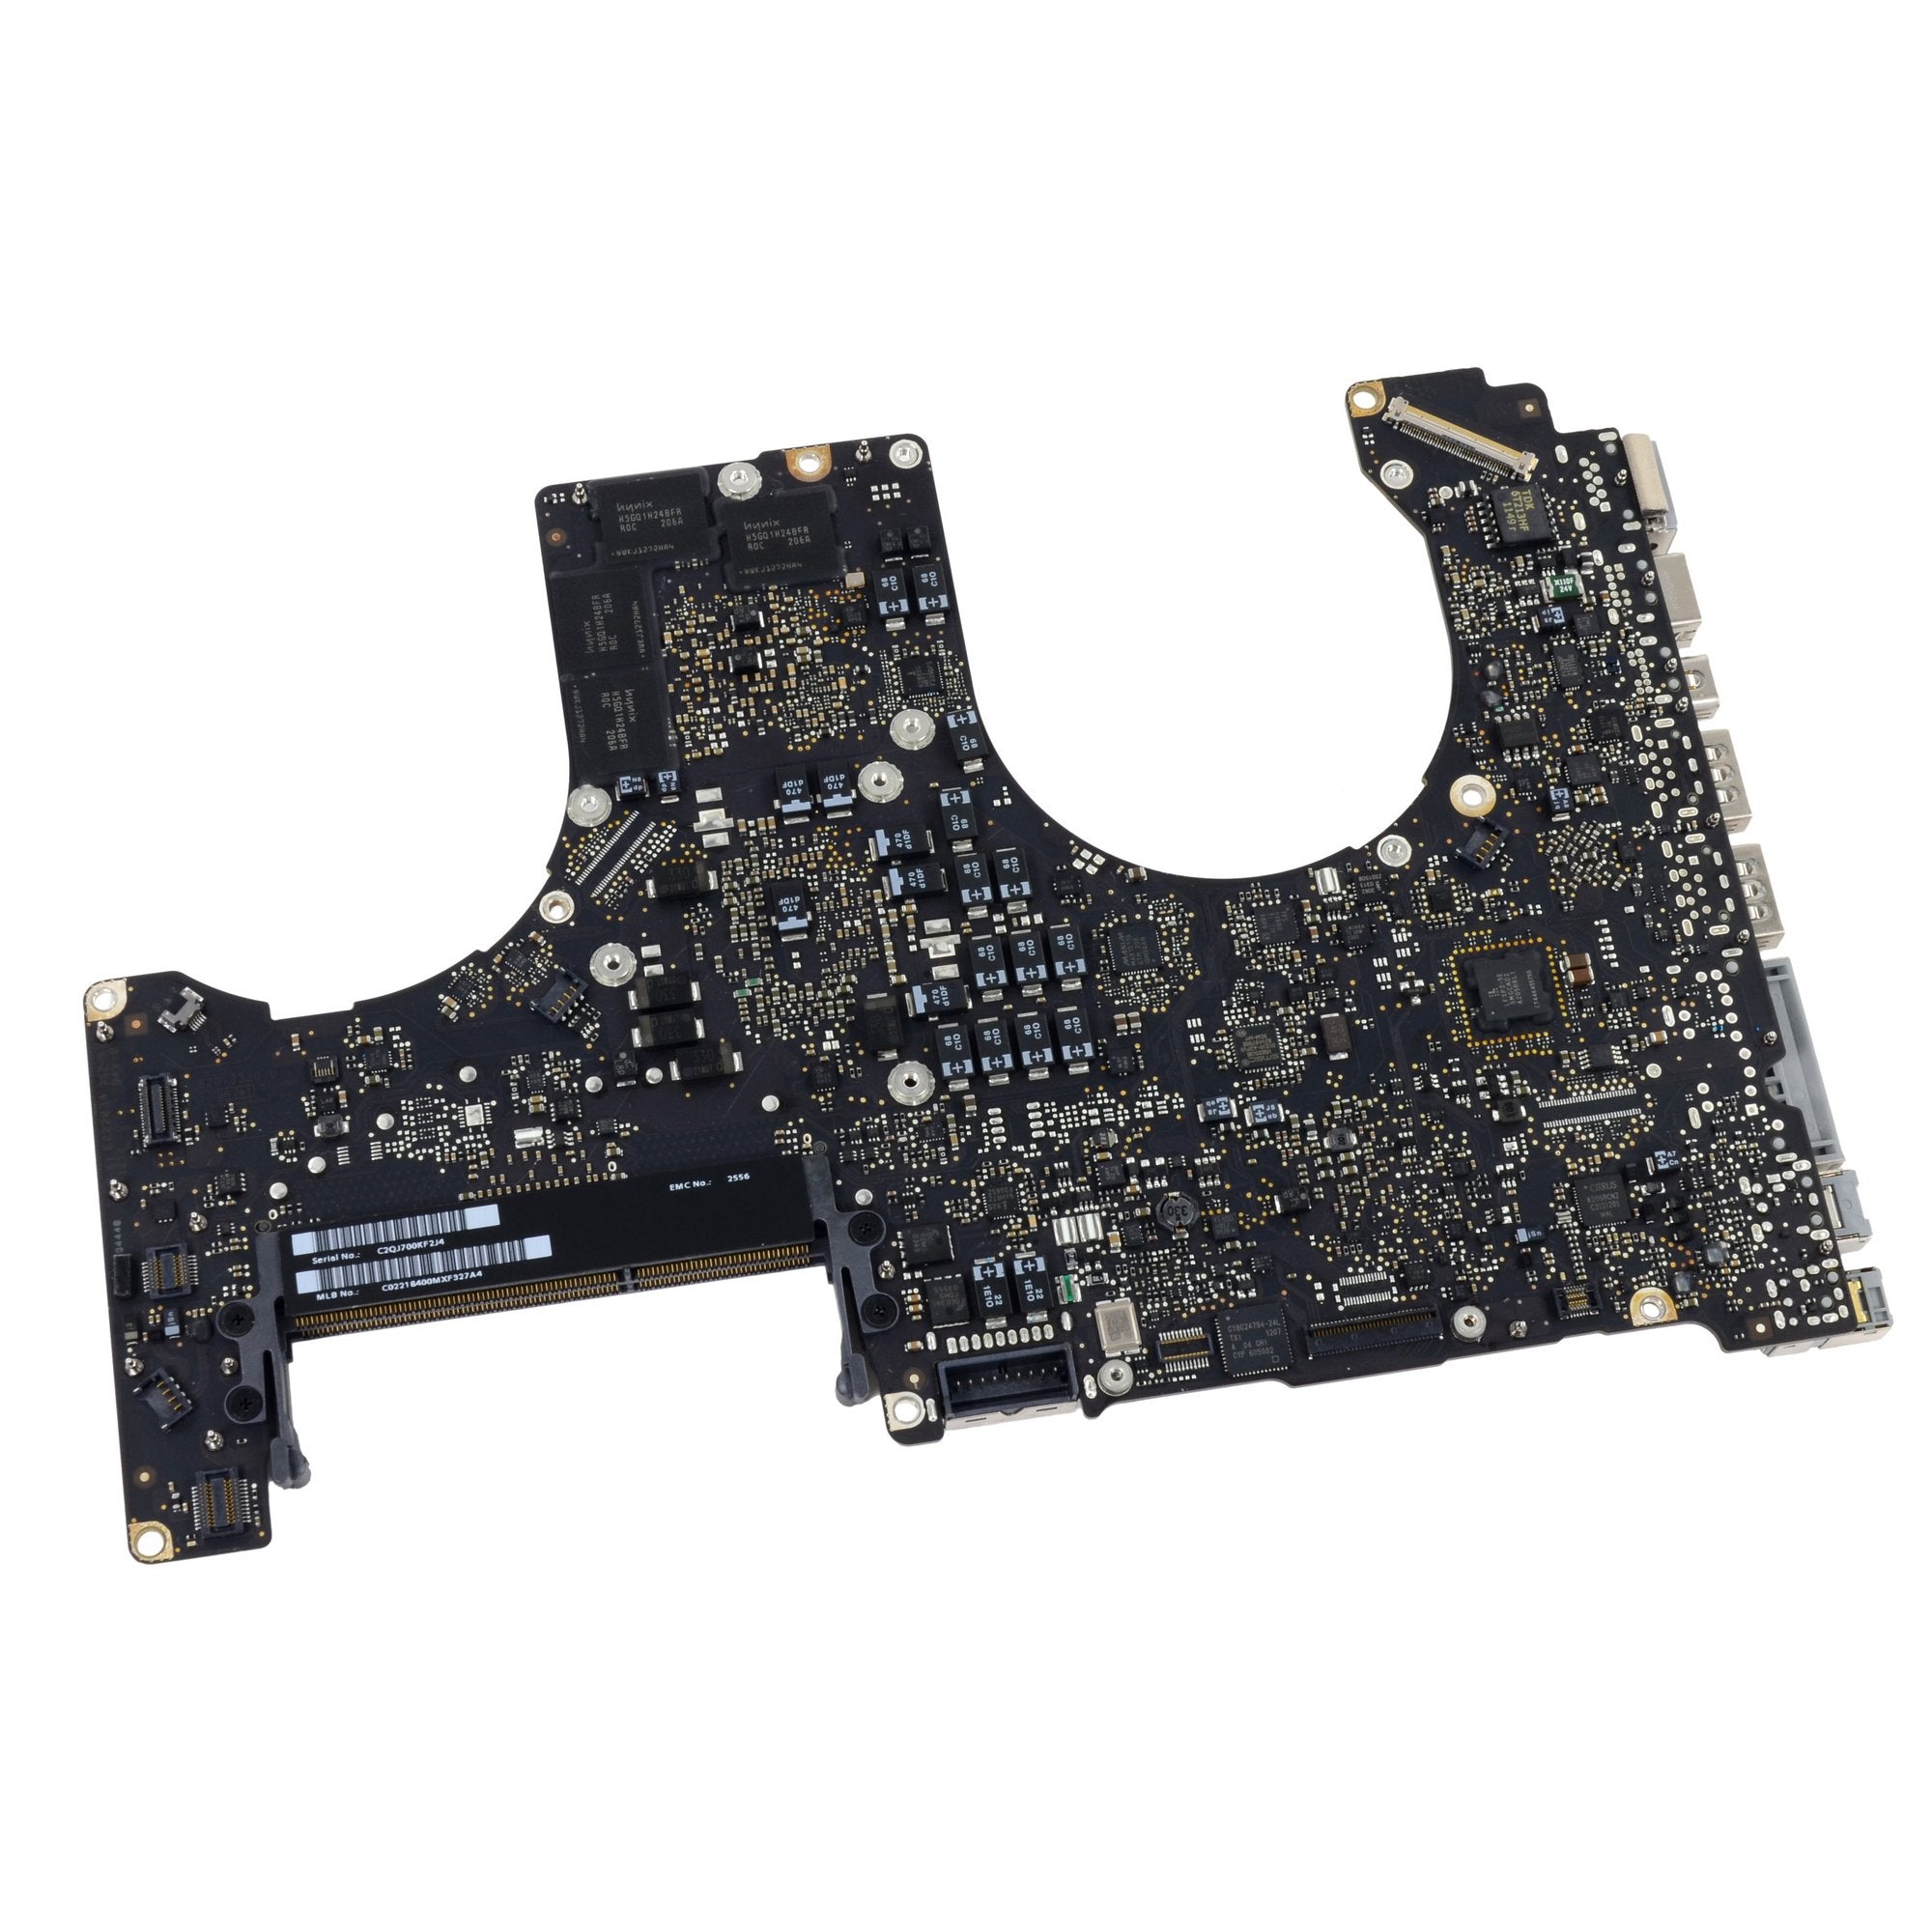 MacBook Pro 15" Unibody (Mid 2012) 2.3 GHz Logic Board